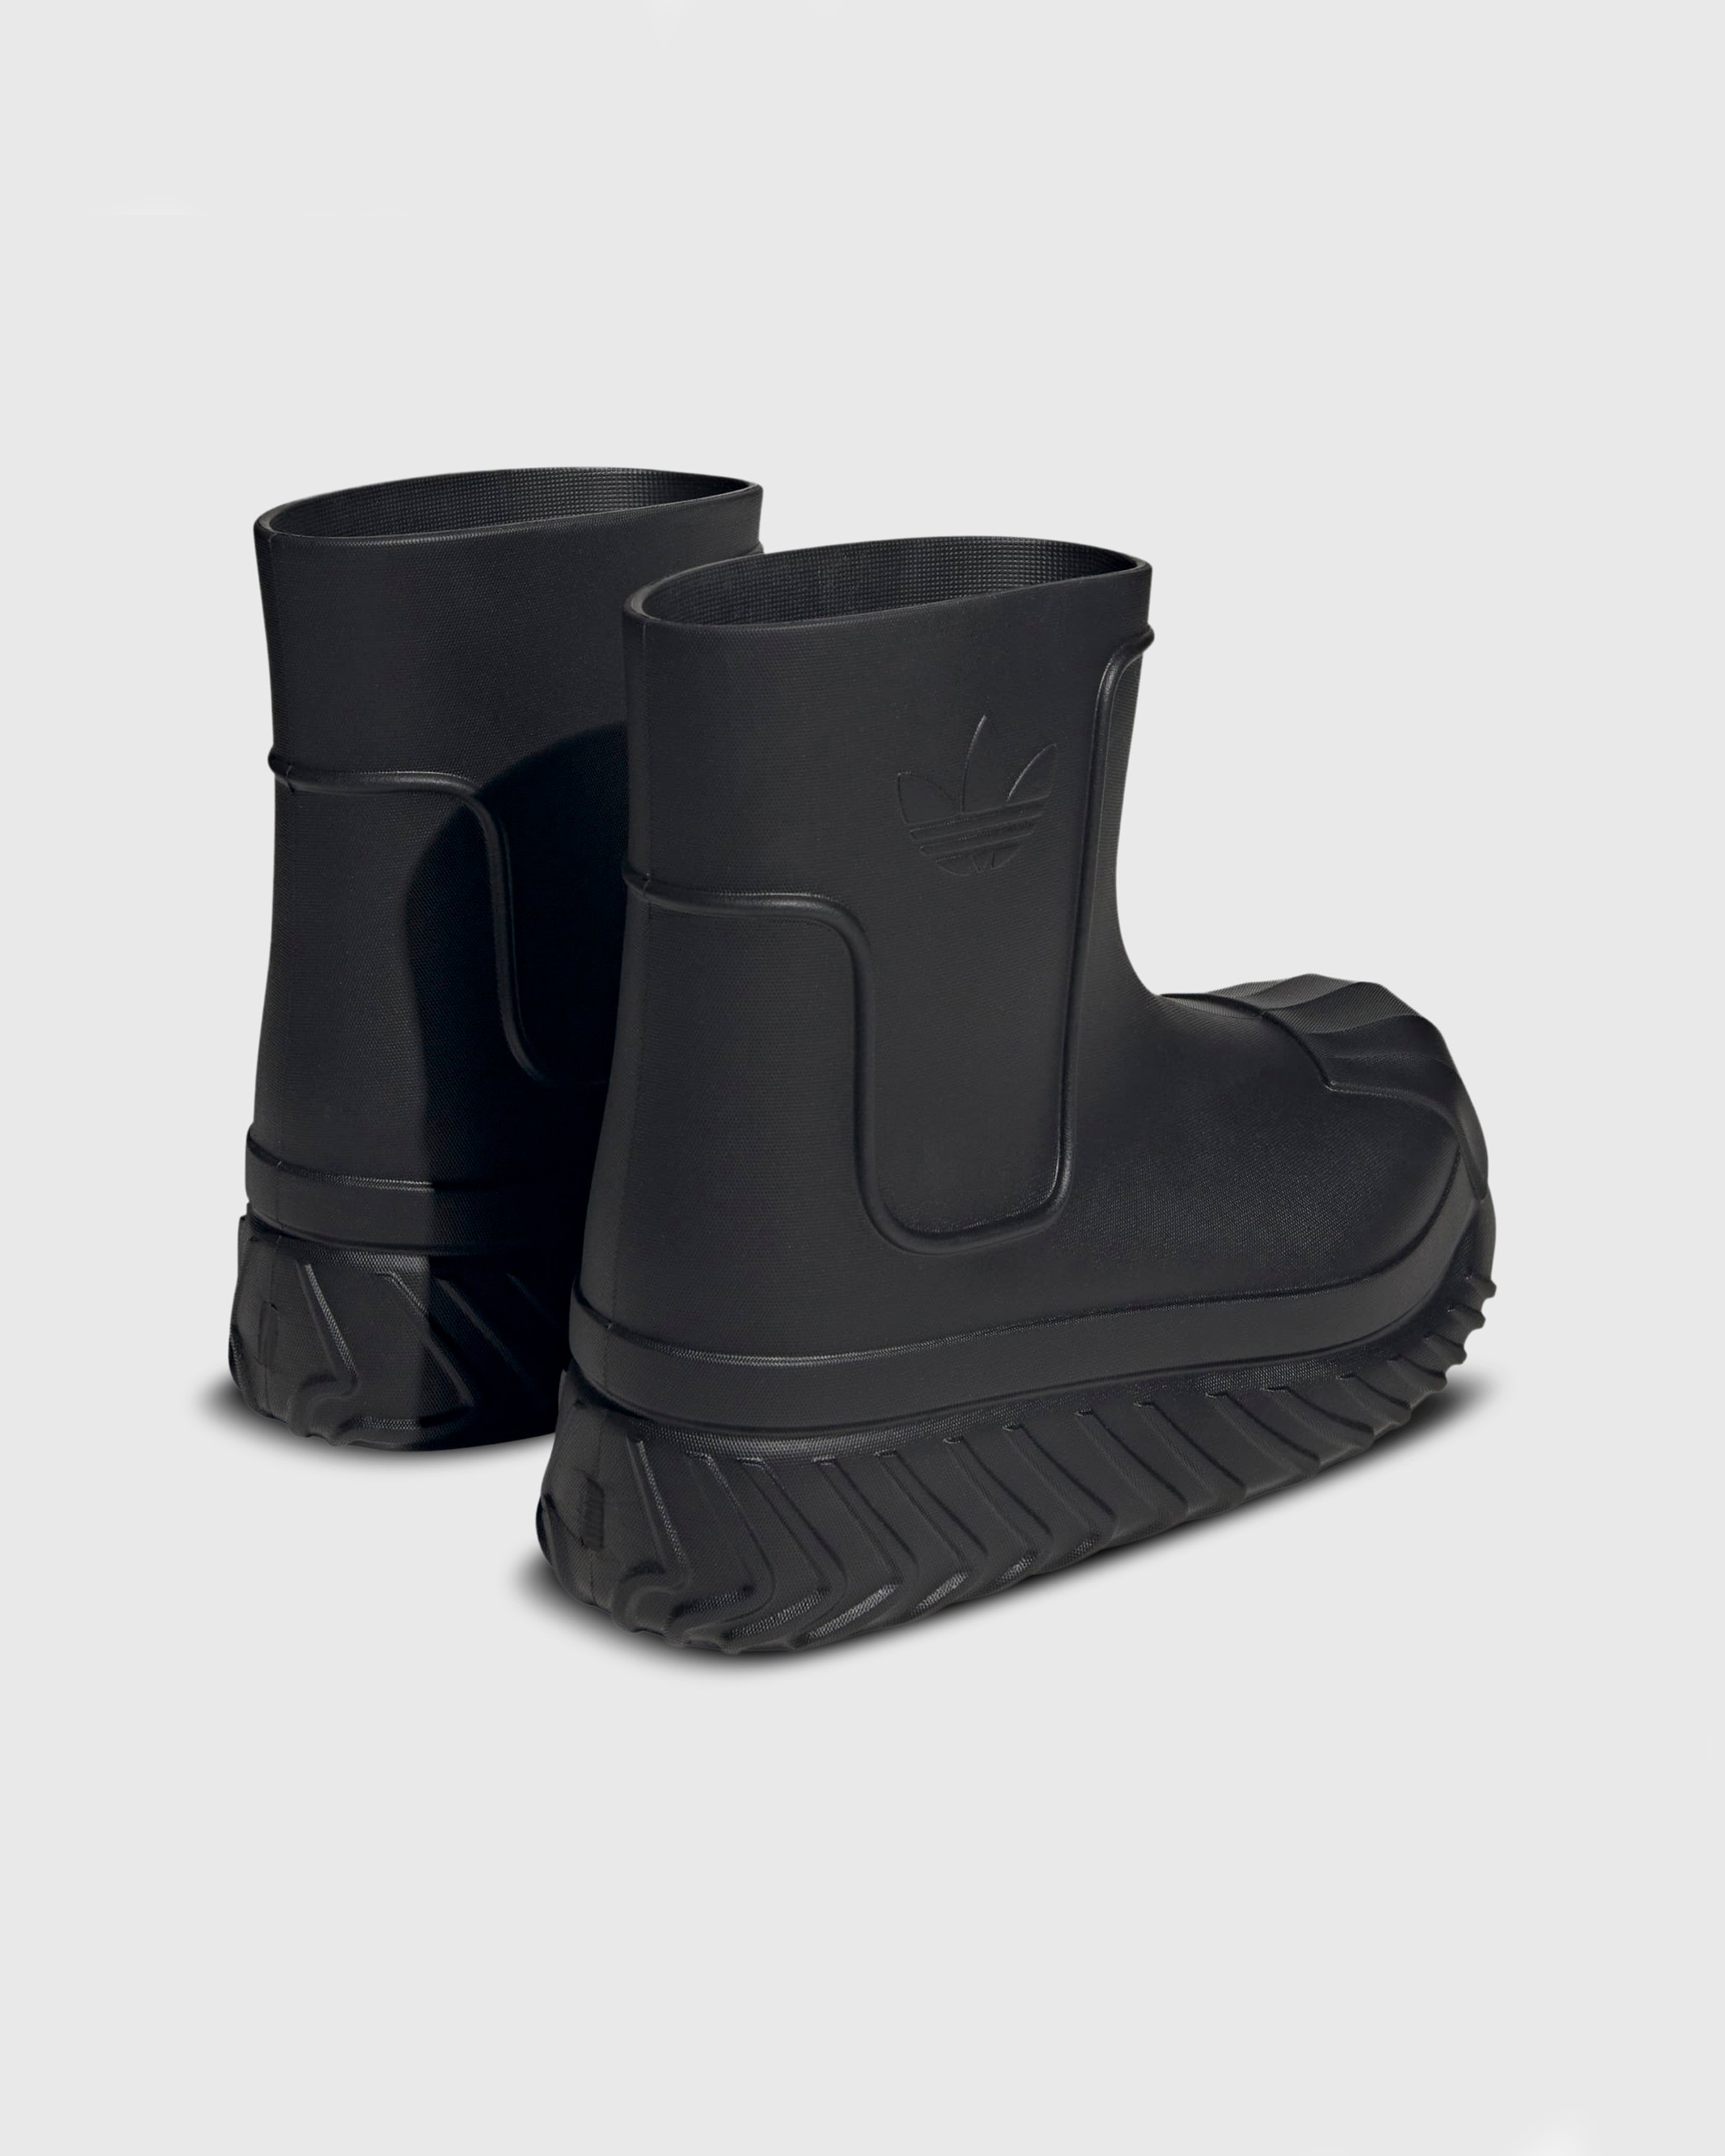 Adidas - ADIFOM SUPERSTAR BO CBLACK/CBLACK/GRESIX - Footwear - Black - Image 4